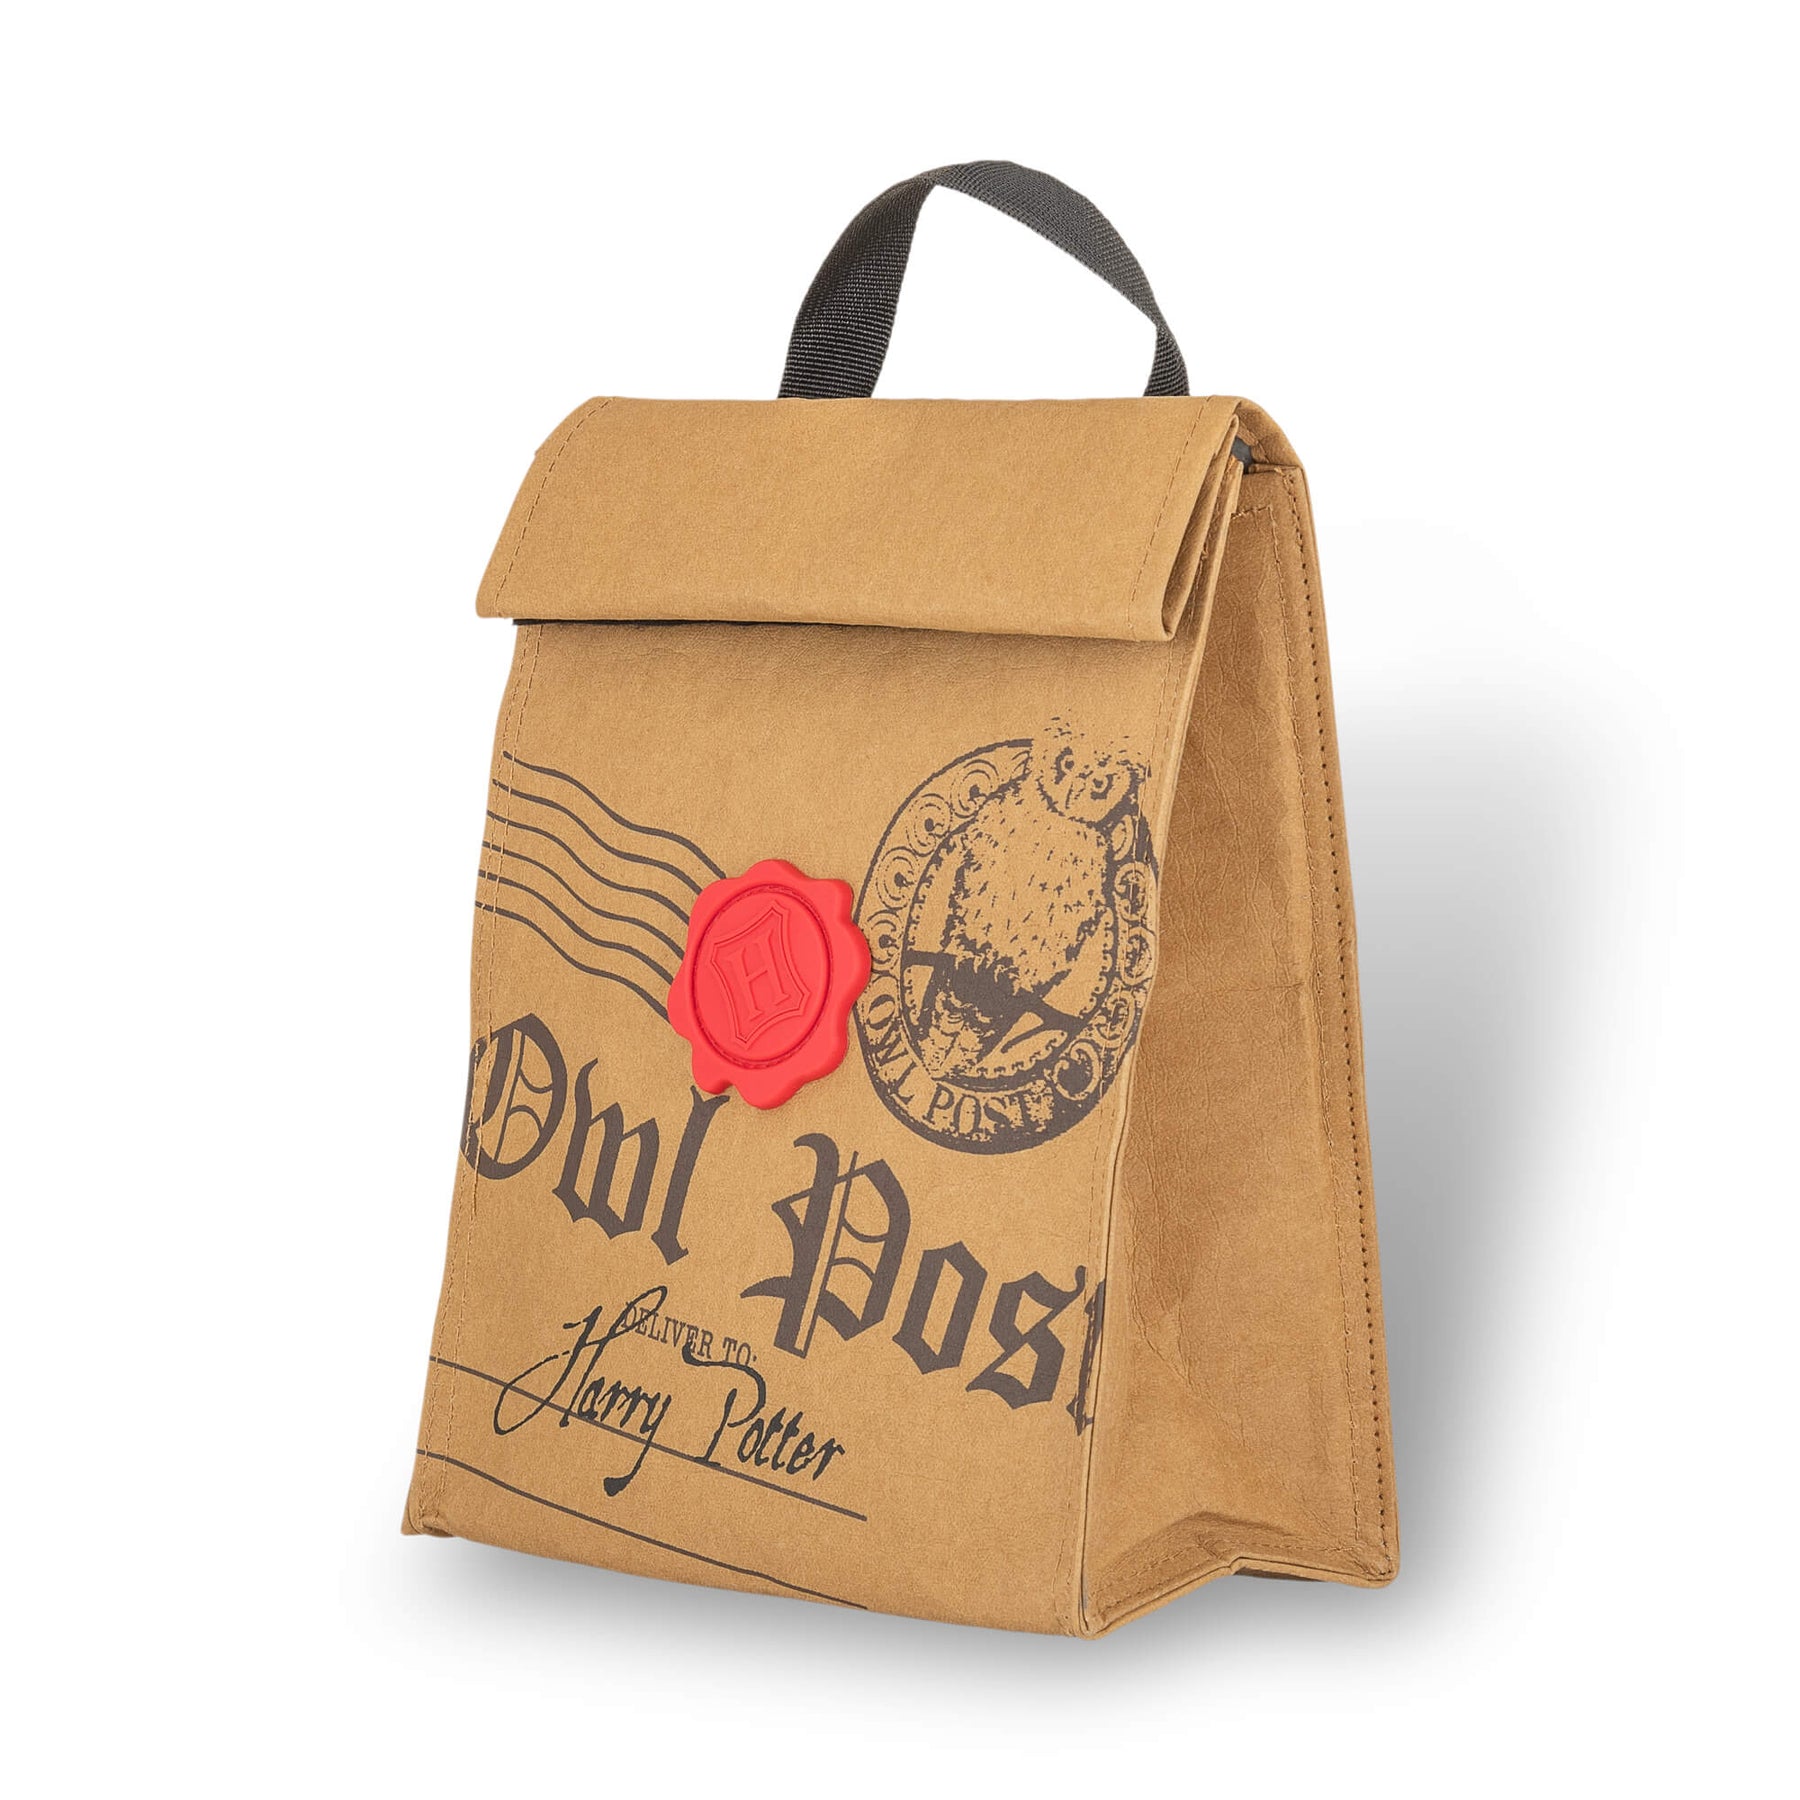 Harry Potter Owl Post Lunch Bag